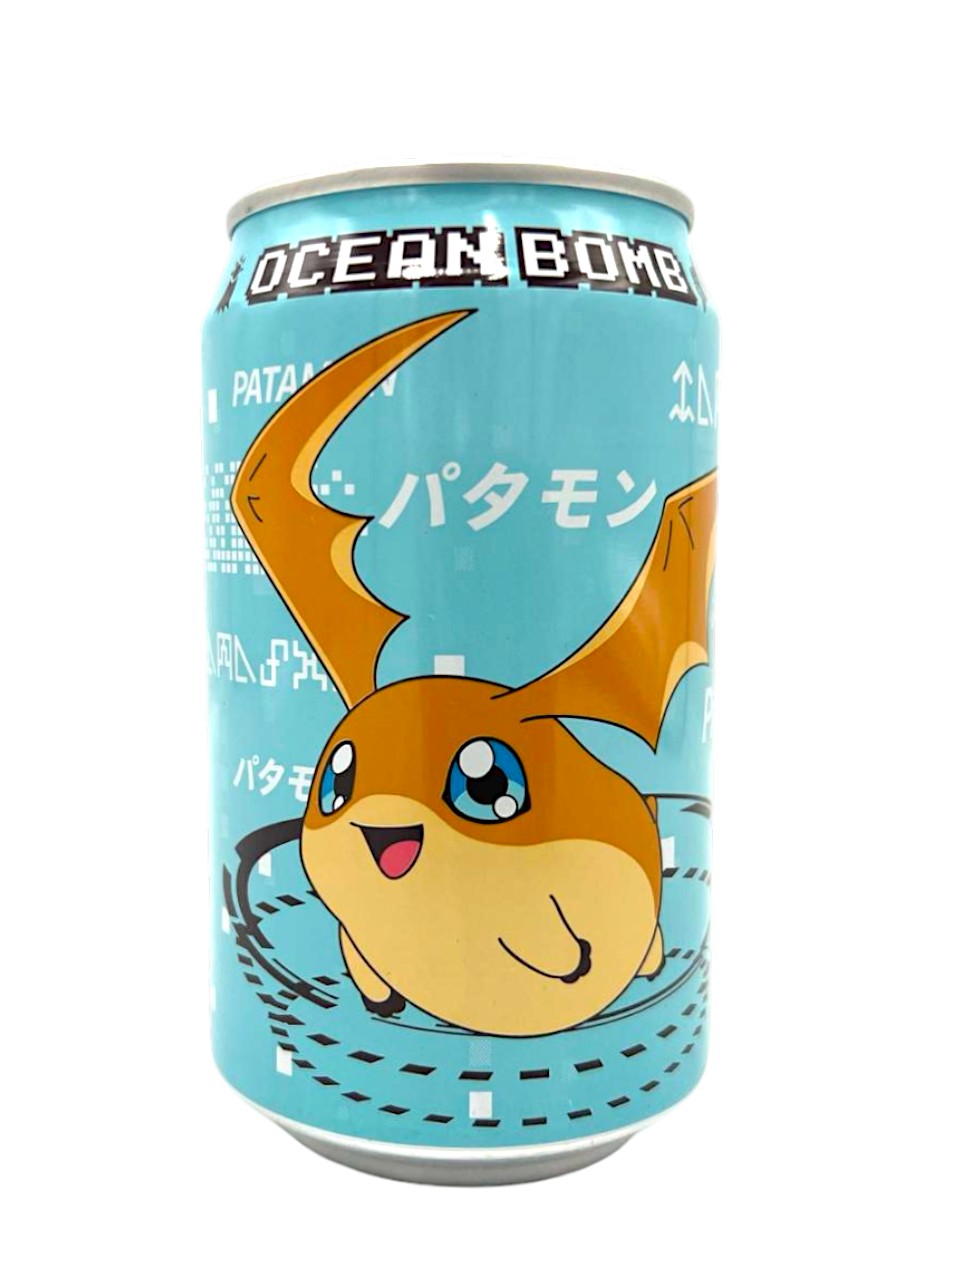 Ocean Bomb Lemon Flavor 330ml (Taiwan)